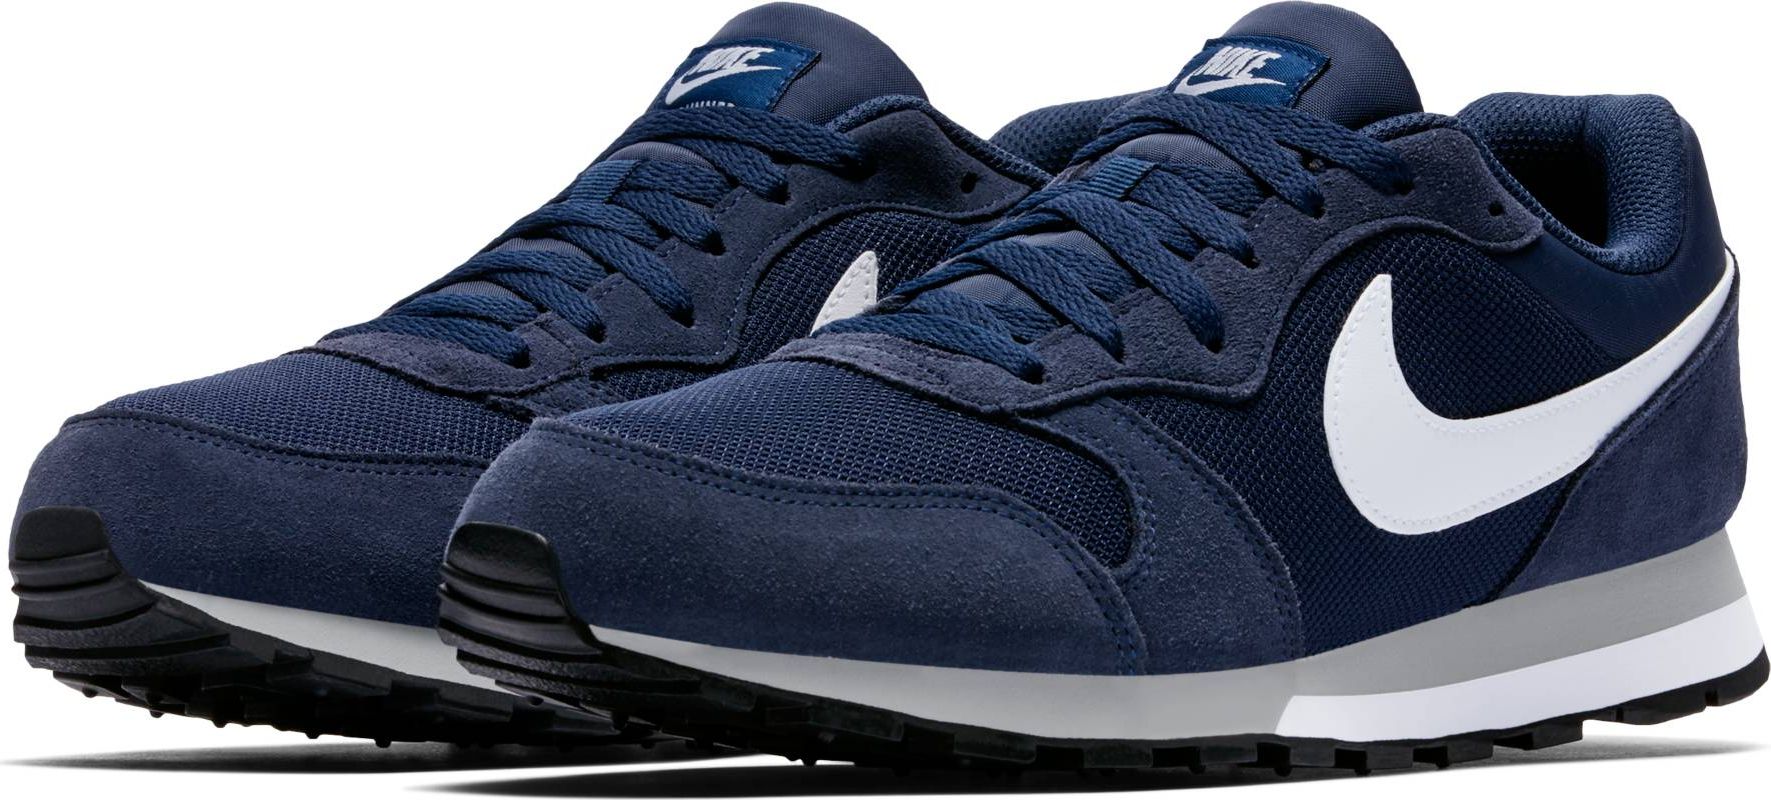 Кроссовки мужские Nike MD Runner 2, цвет: синий. 749794-410. Размер 12 (45)